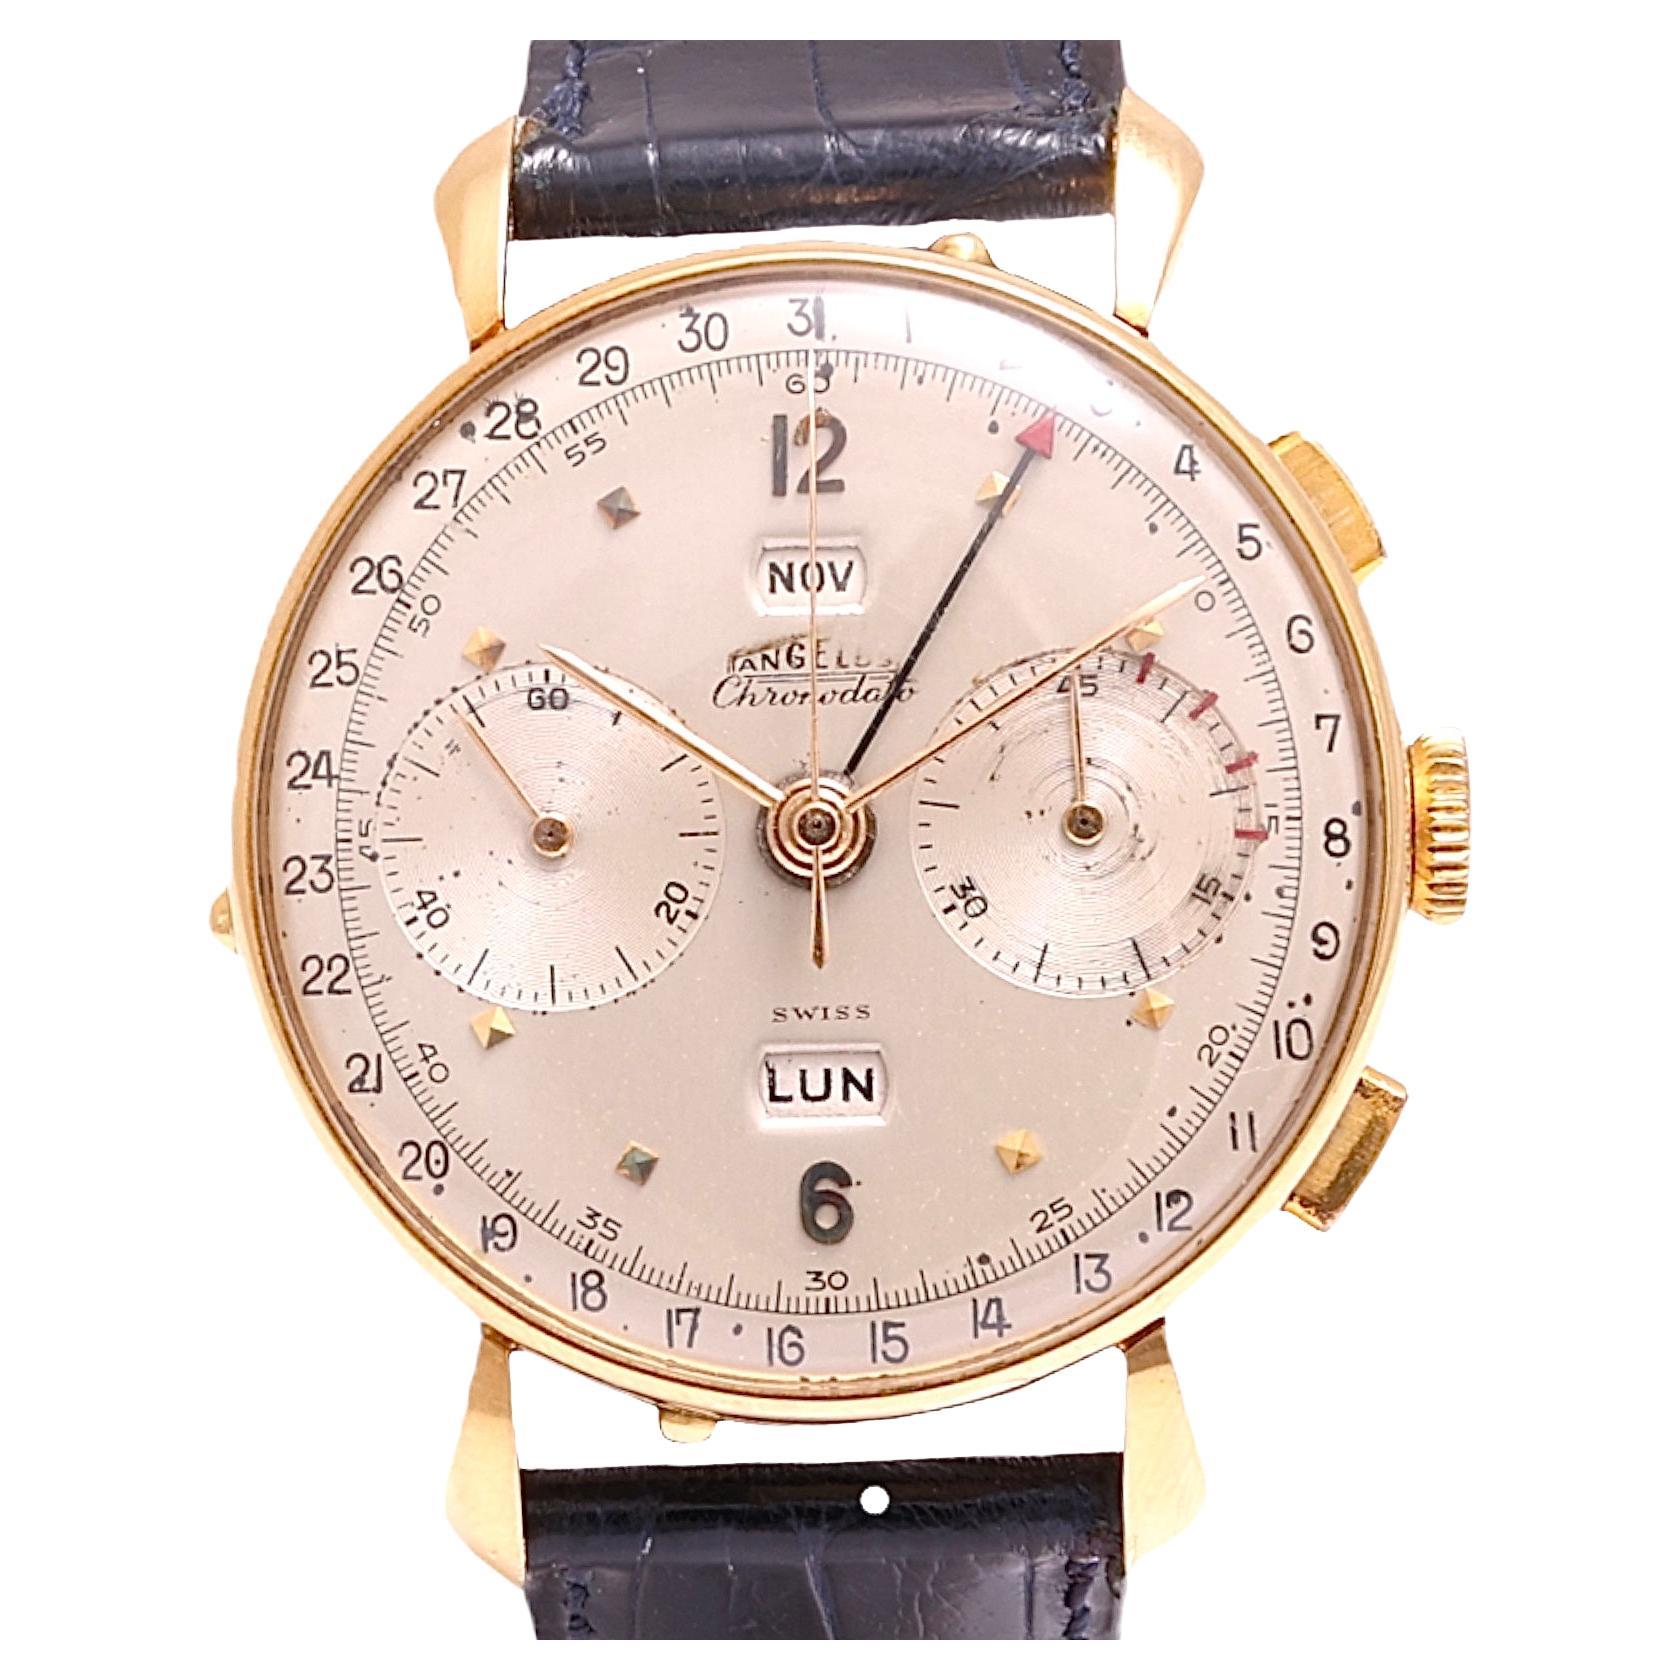 18 Kt Gold Angelus Chronodate Triple Date Jumbo 38mm Chronograph Wrist Watch